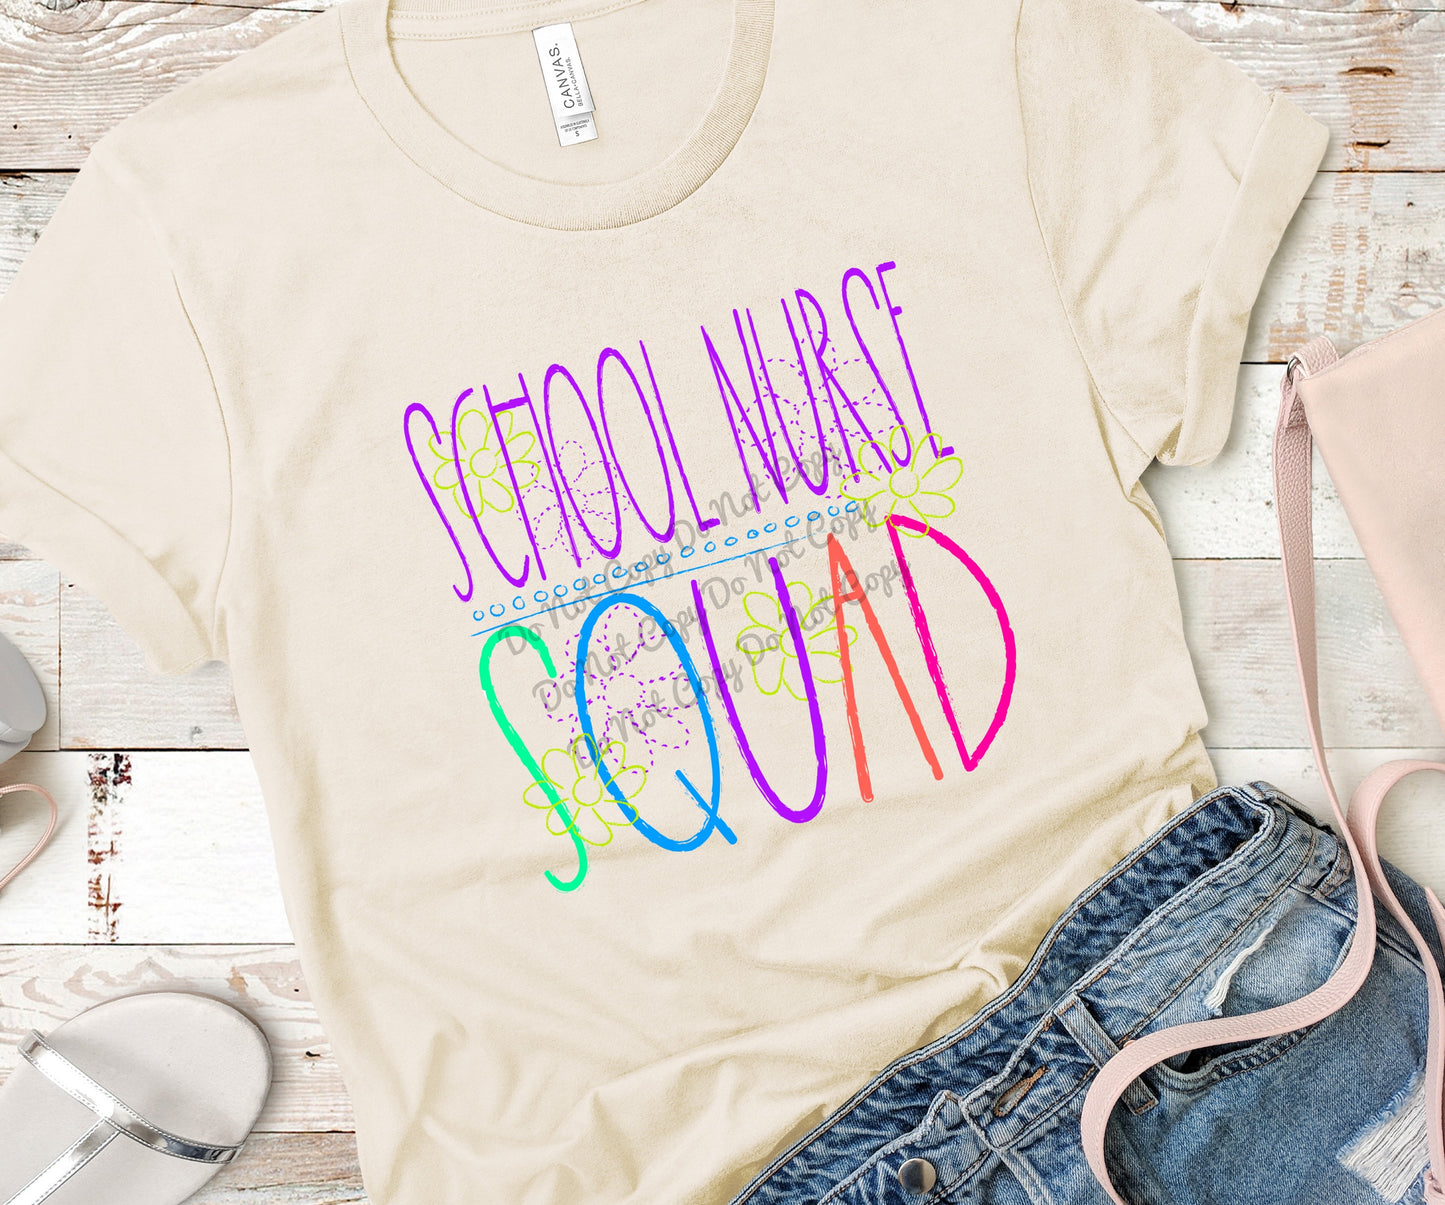 Chalkboard school nurse squad-DTF